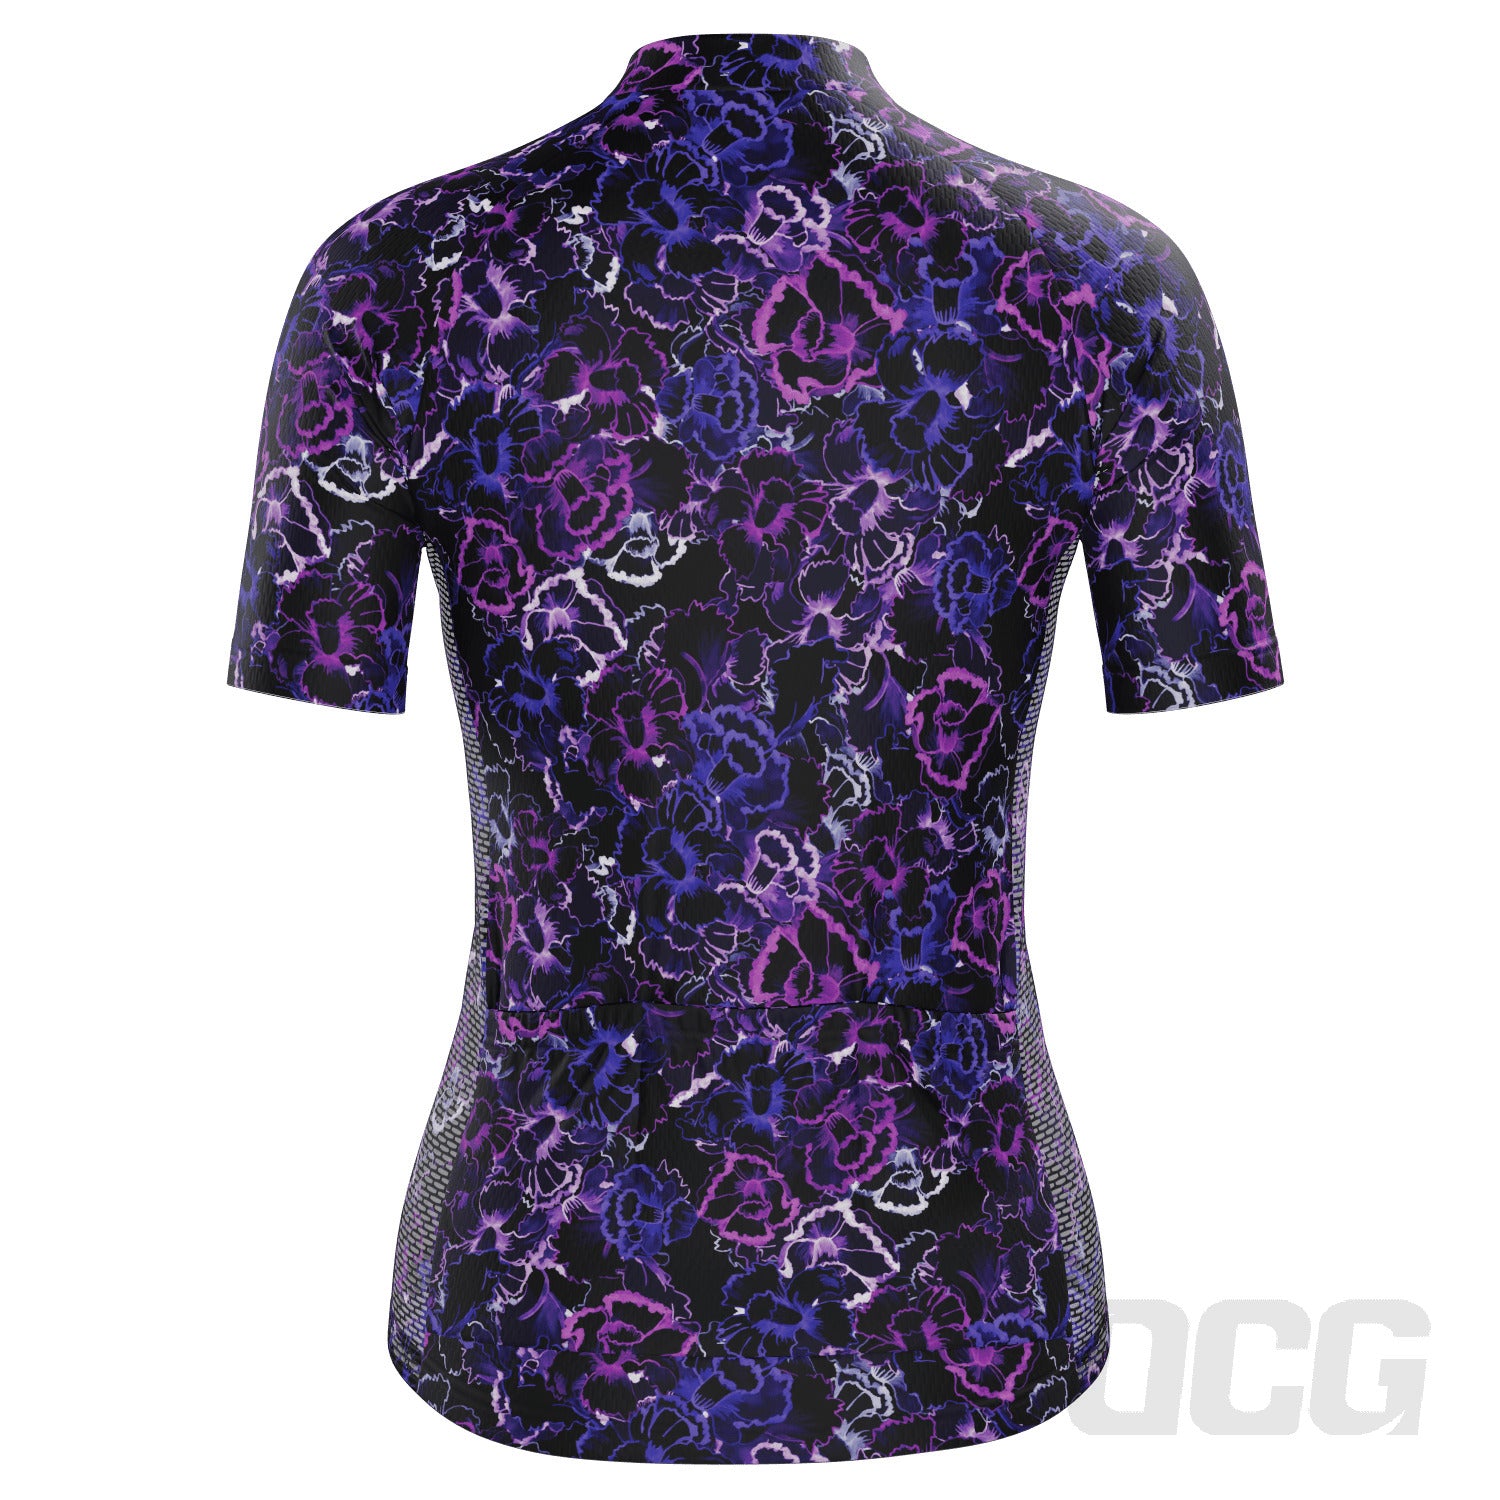 Women's Floral Dark Neon Short Sleeve Cycling Jersey